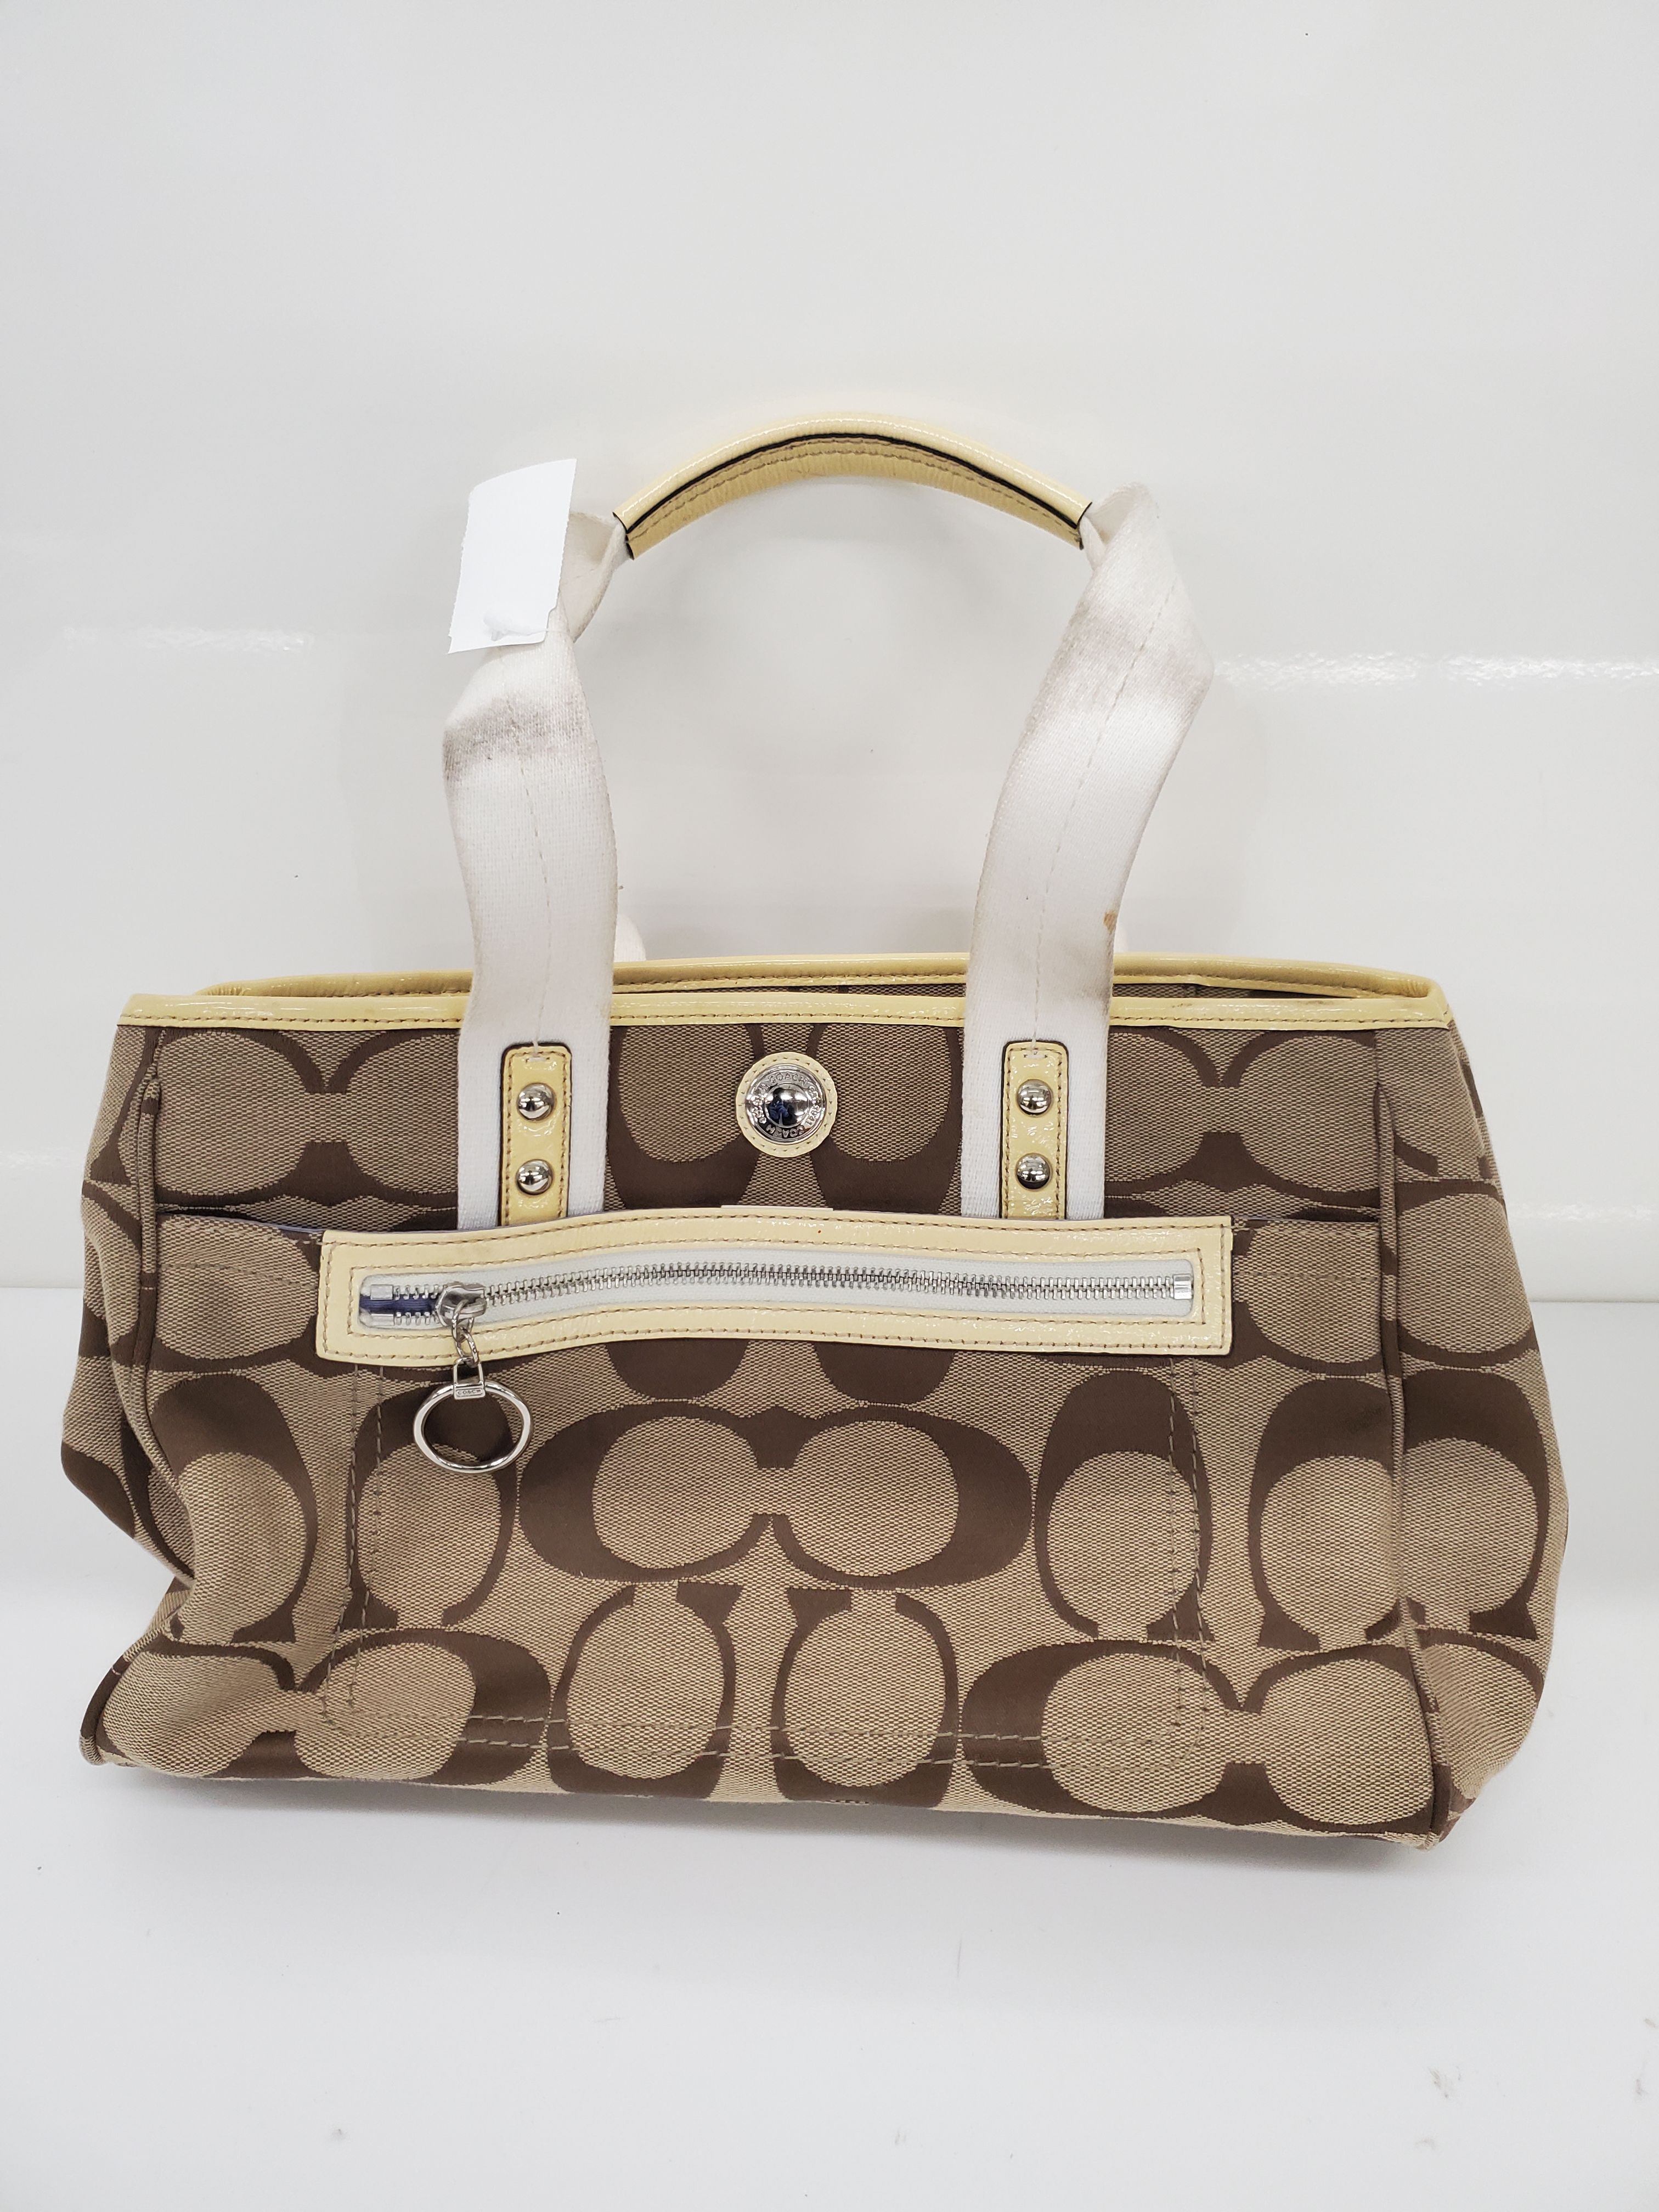 Coach F58287 Signature Sierra beige and brown leather satchel purse | eBay